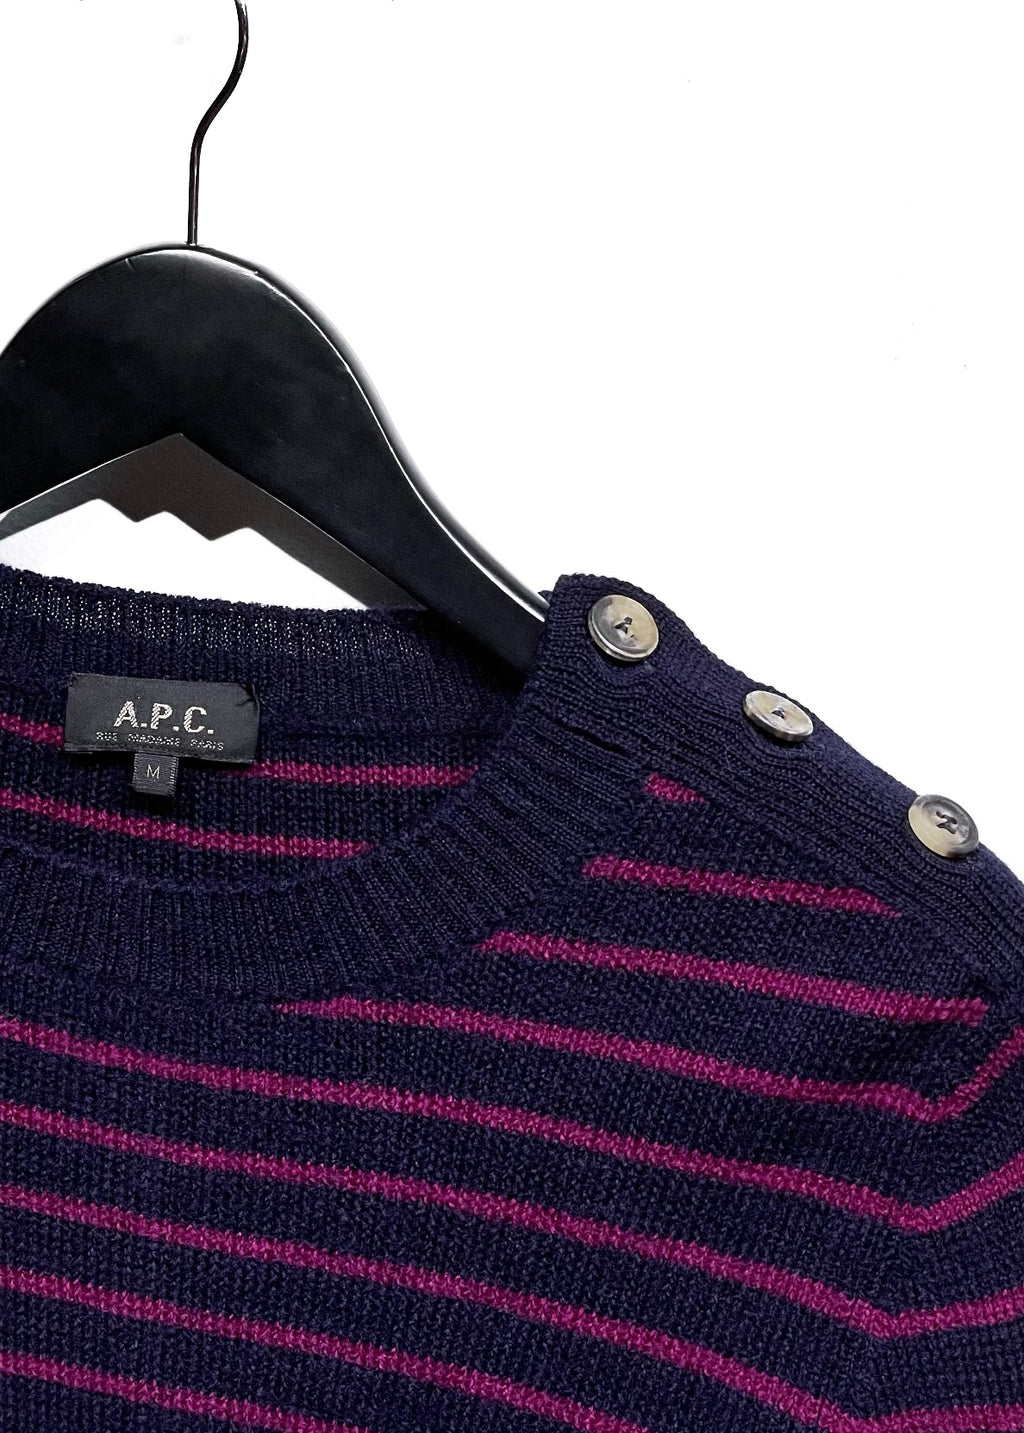 A.P.C. Navy Blue Fuschia Striped Wool Sweater